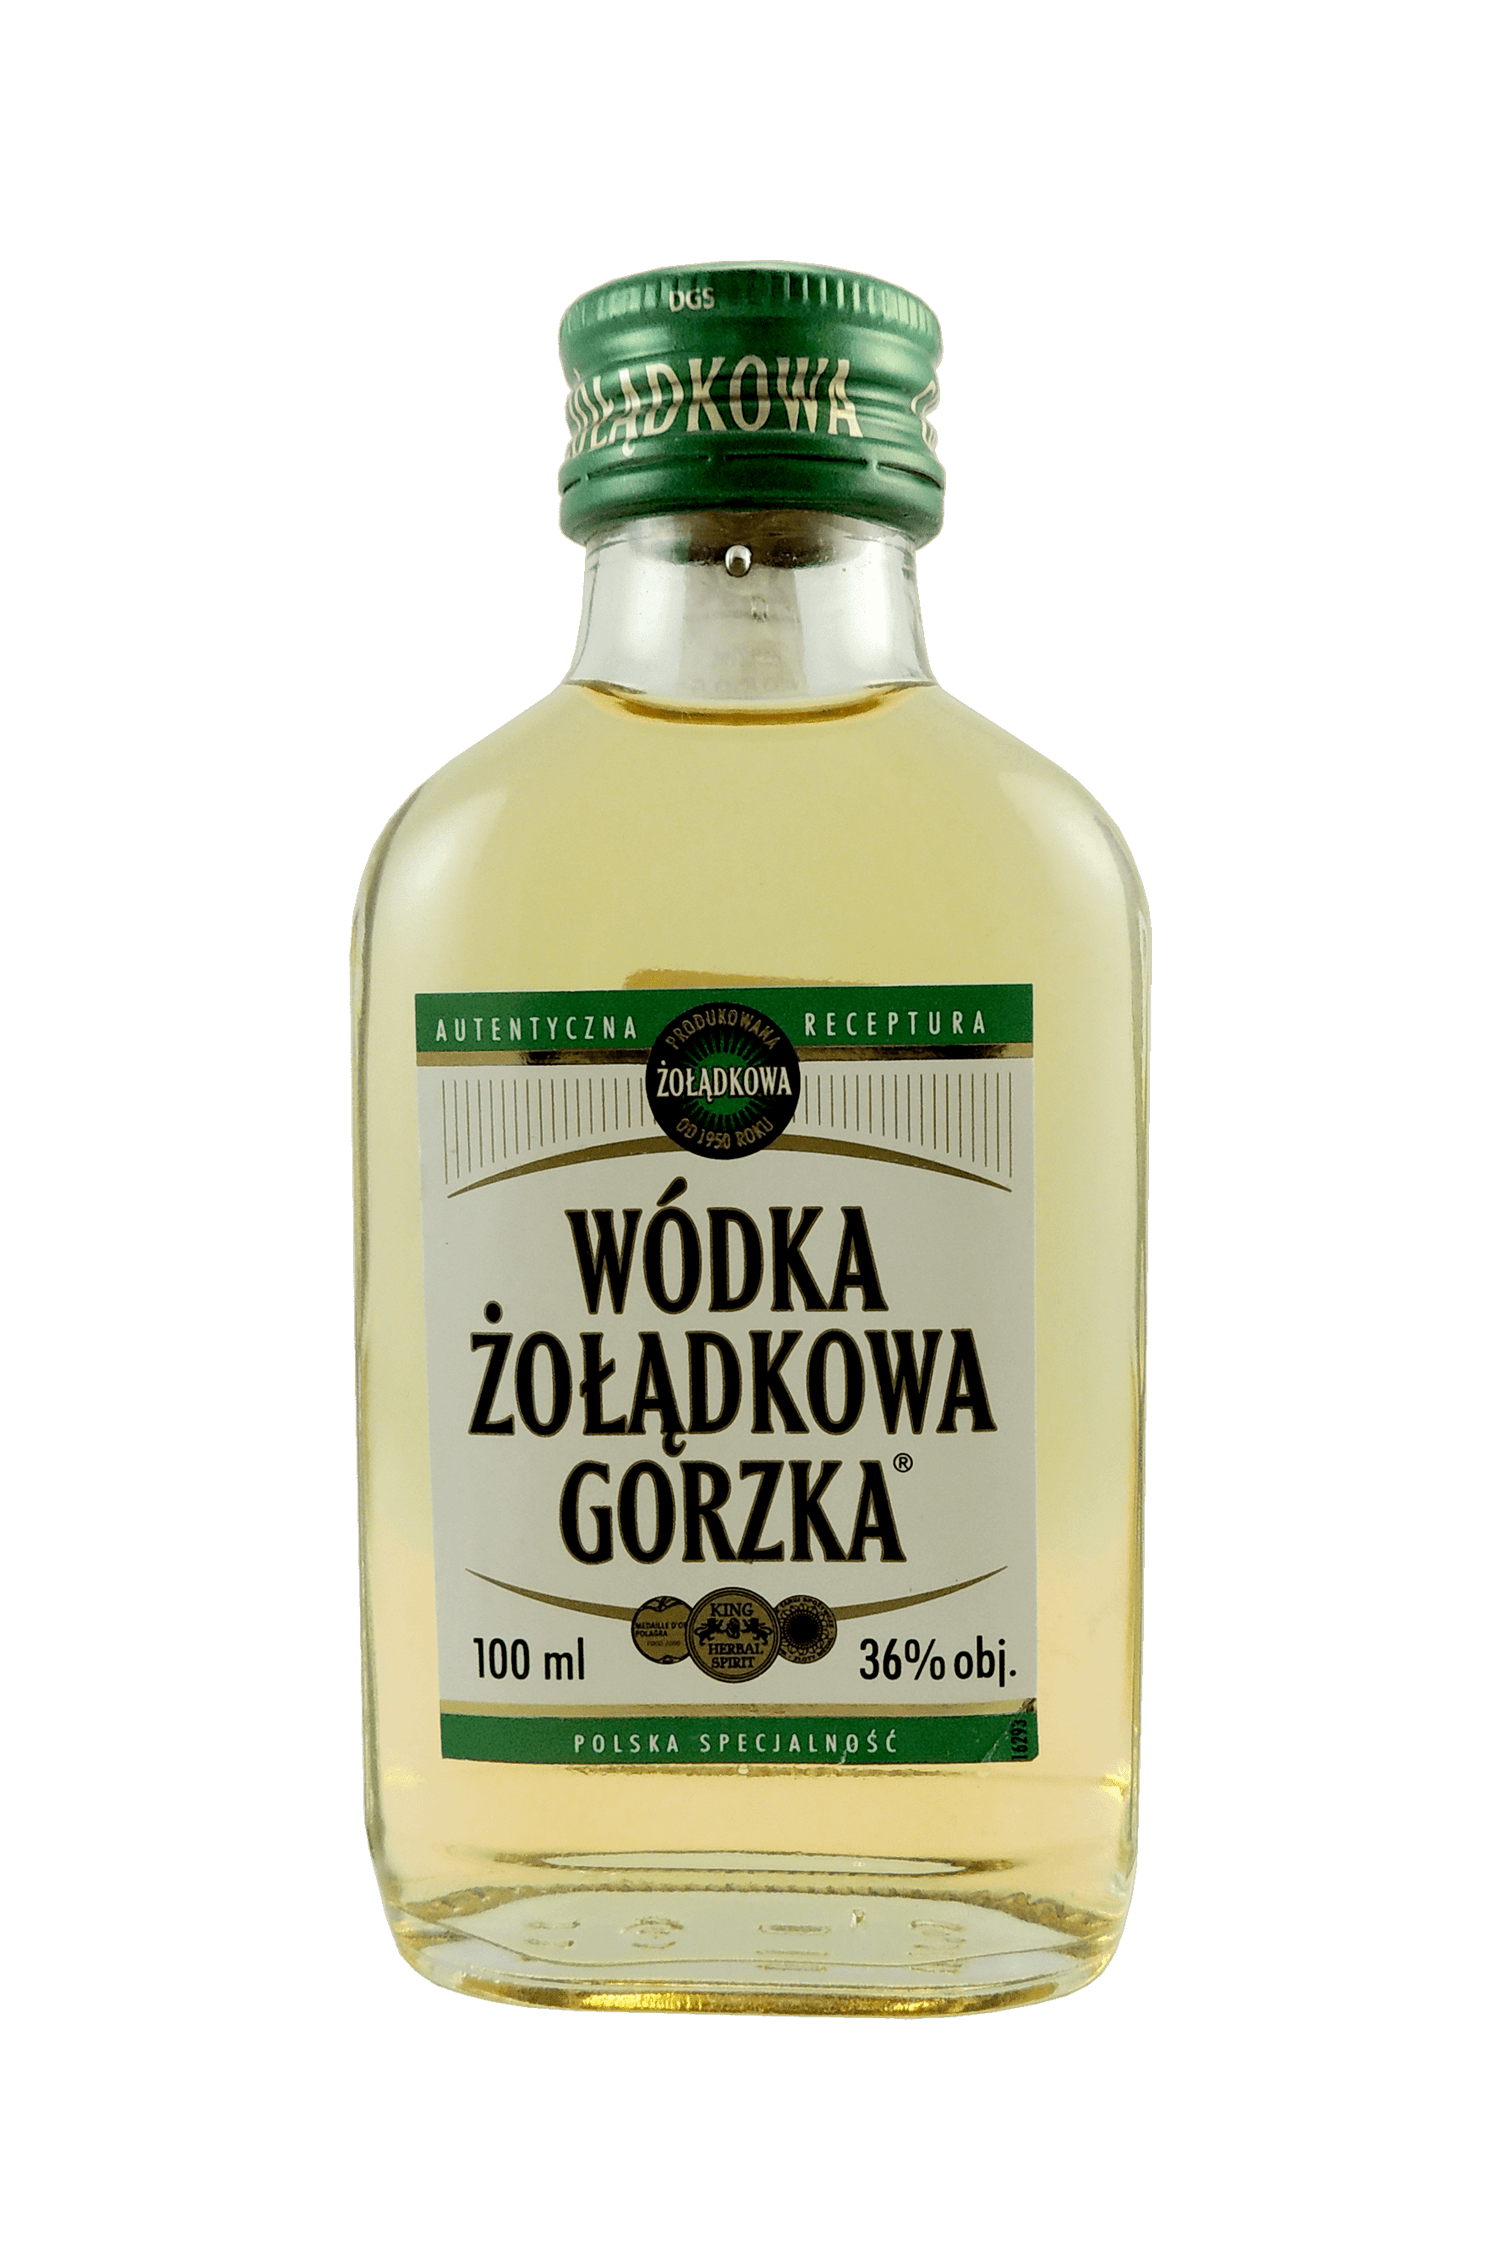 Wódka Žoladkowa Gorzka